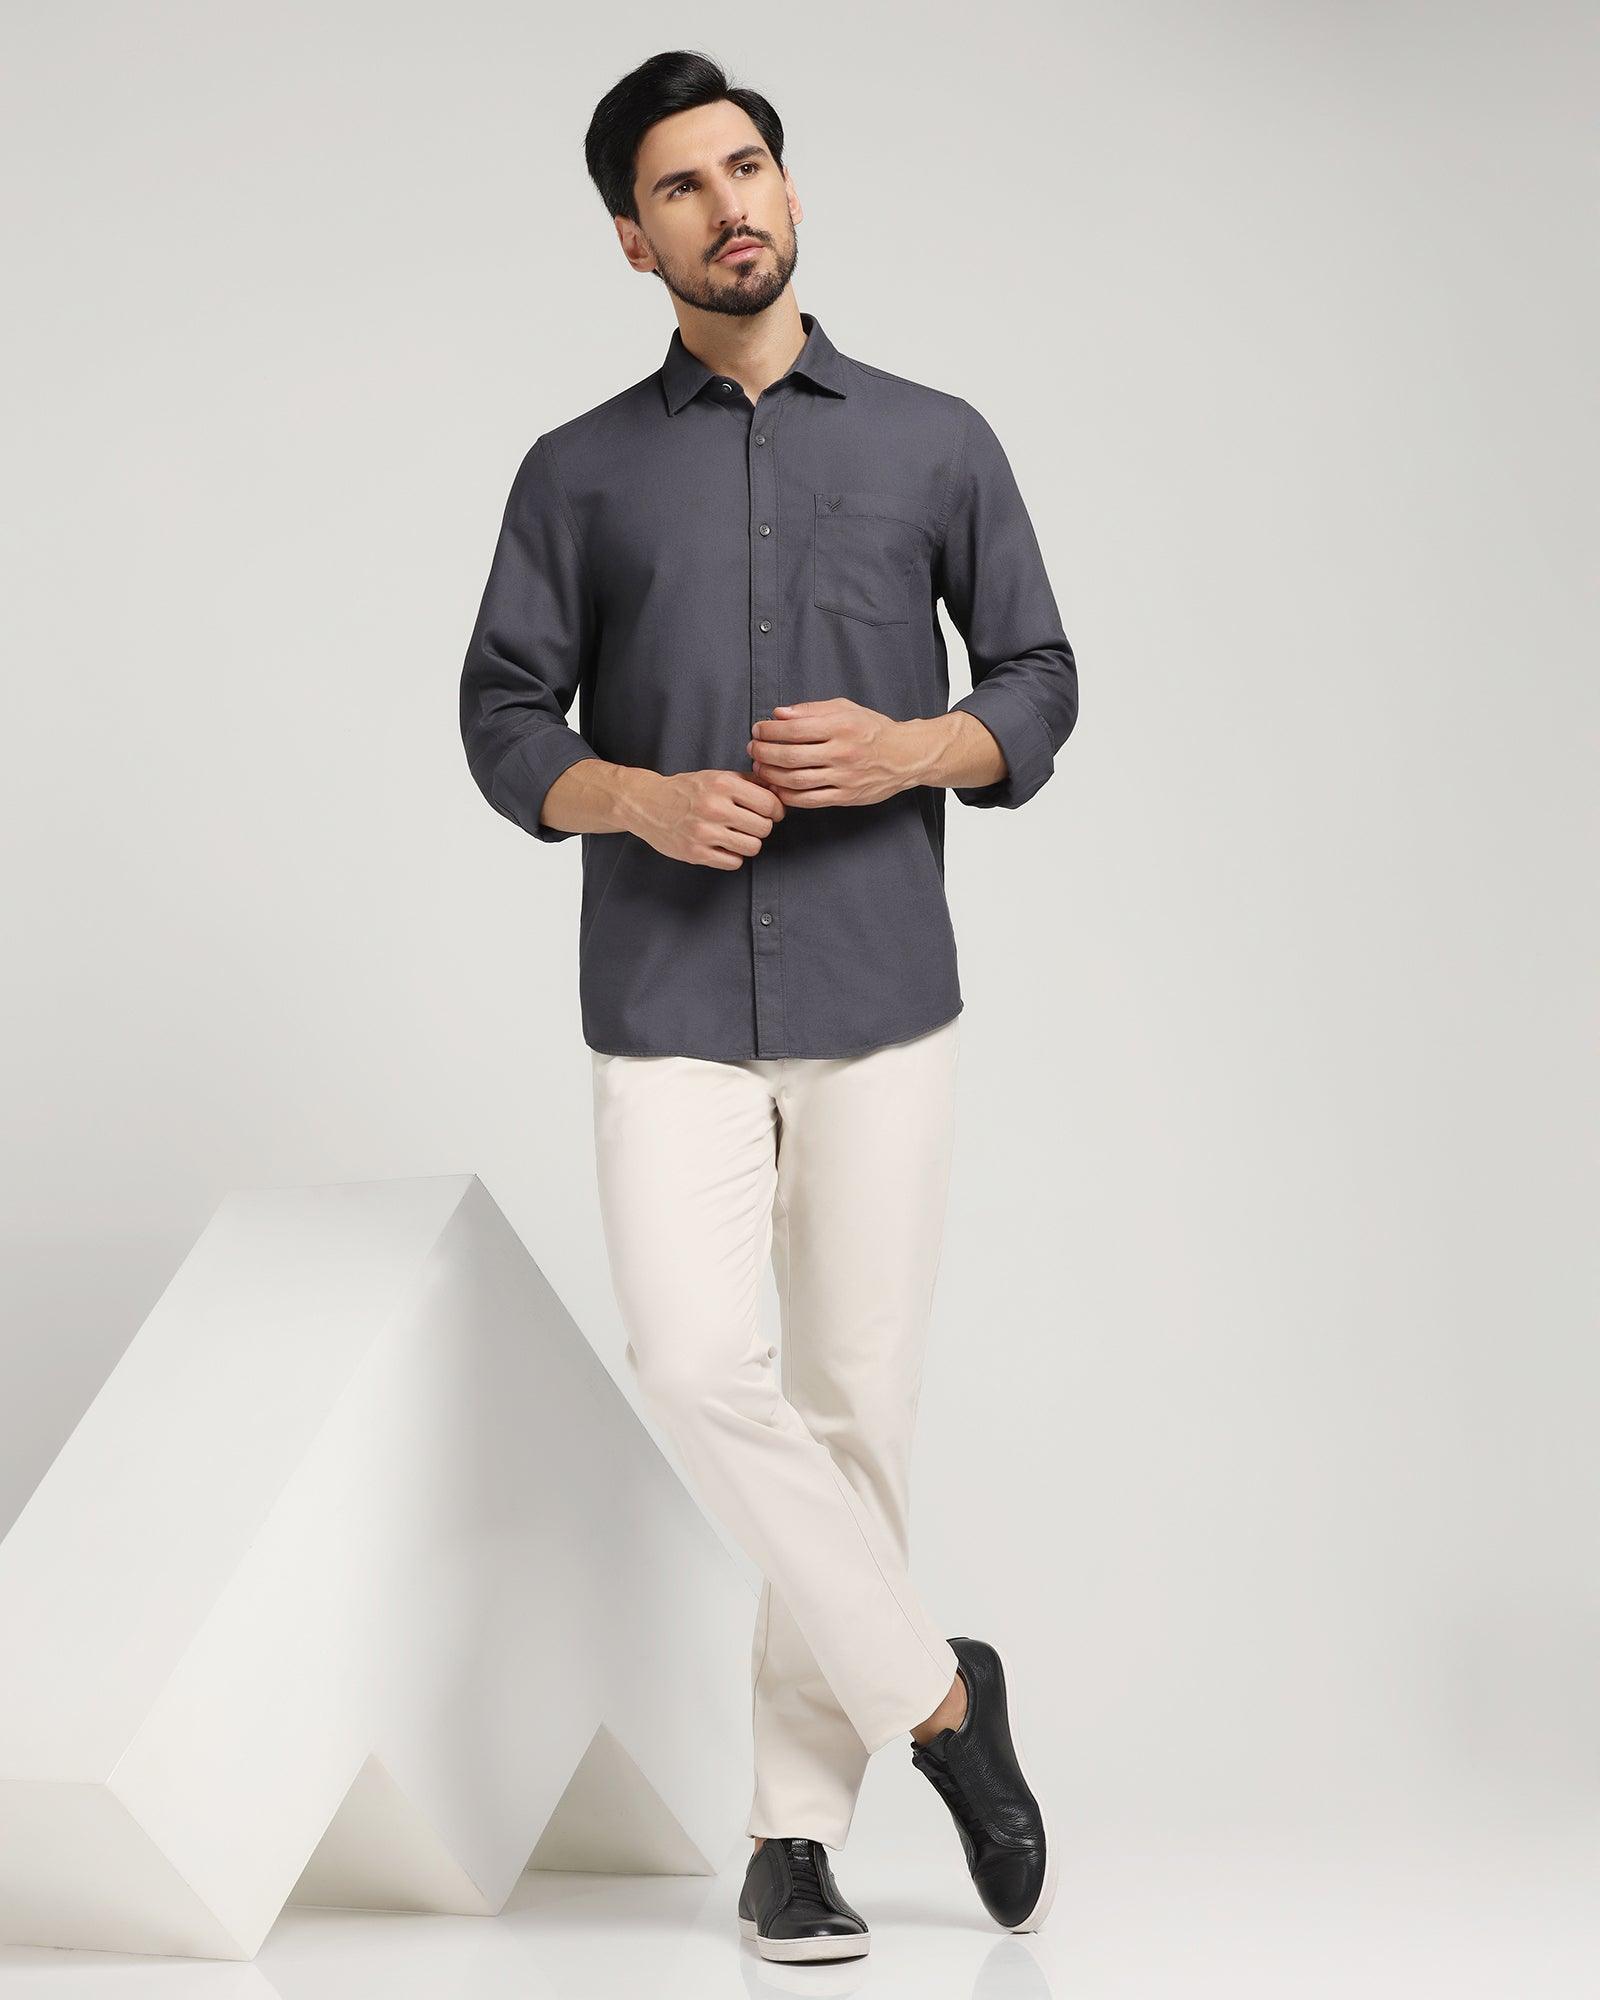 Grey Pant Shirt Combination For Men | Combination Ideas For Grey Pants |  formal grey pant outfits - YouTube